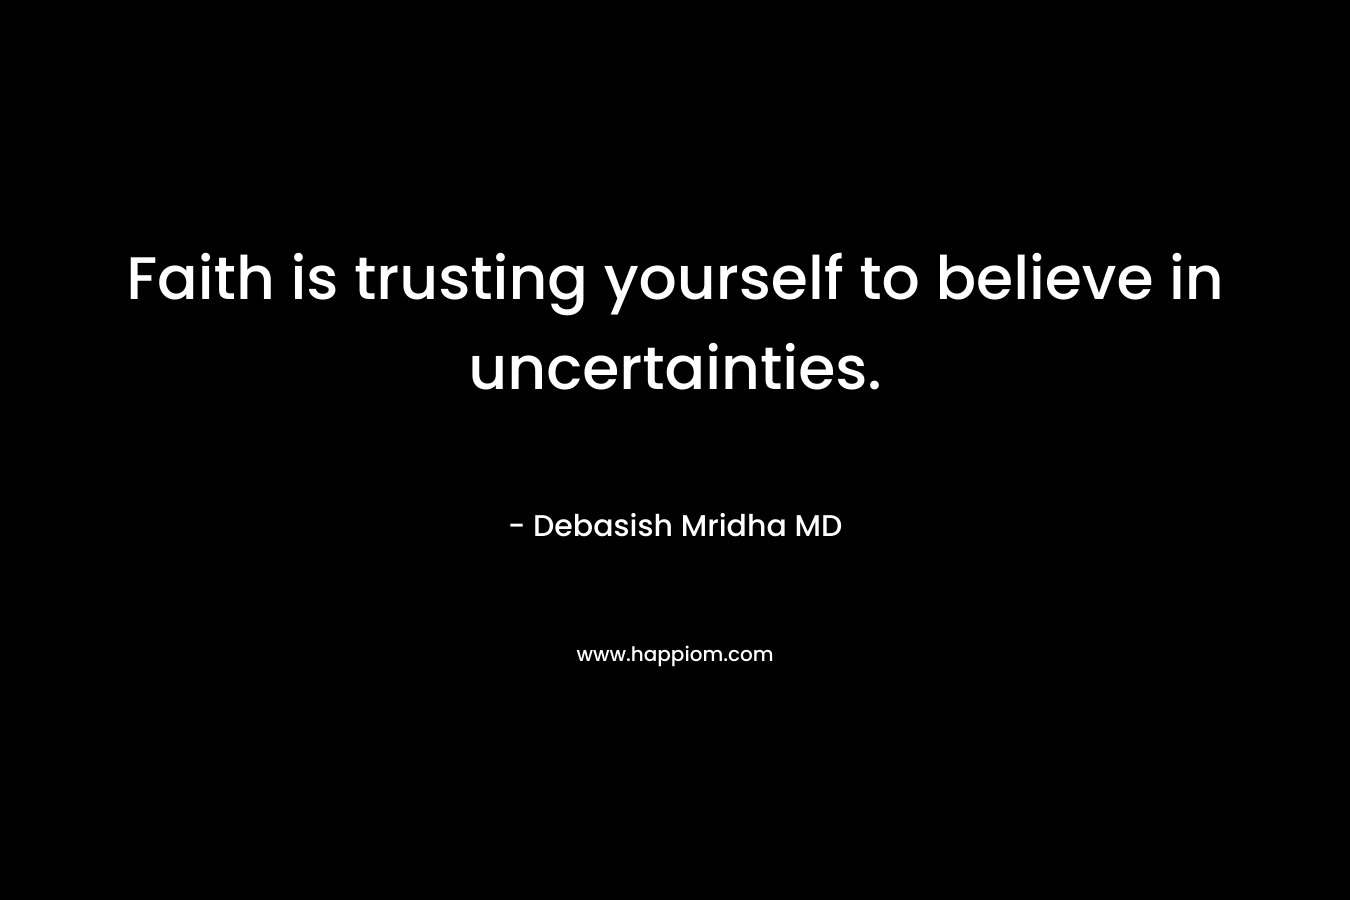 Faith is trusting yourself to believe in uncertainties.